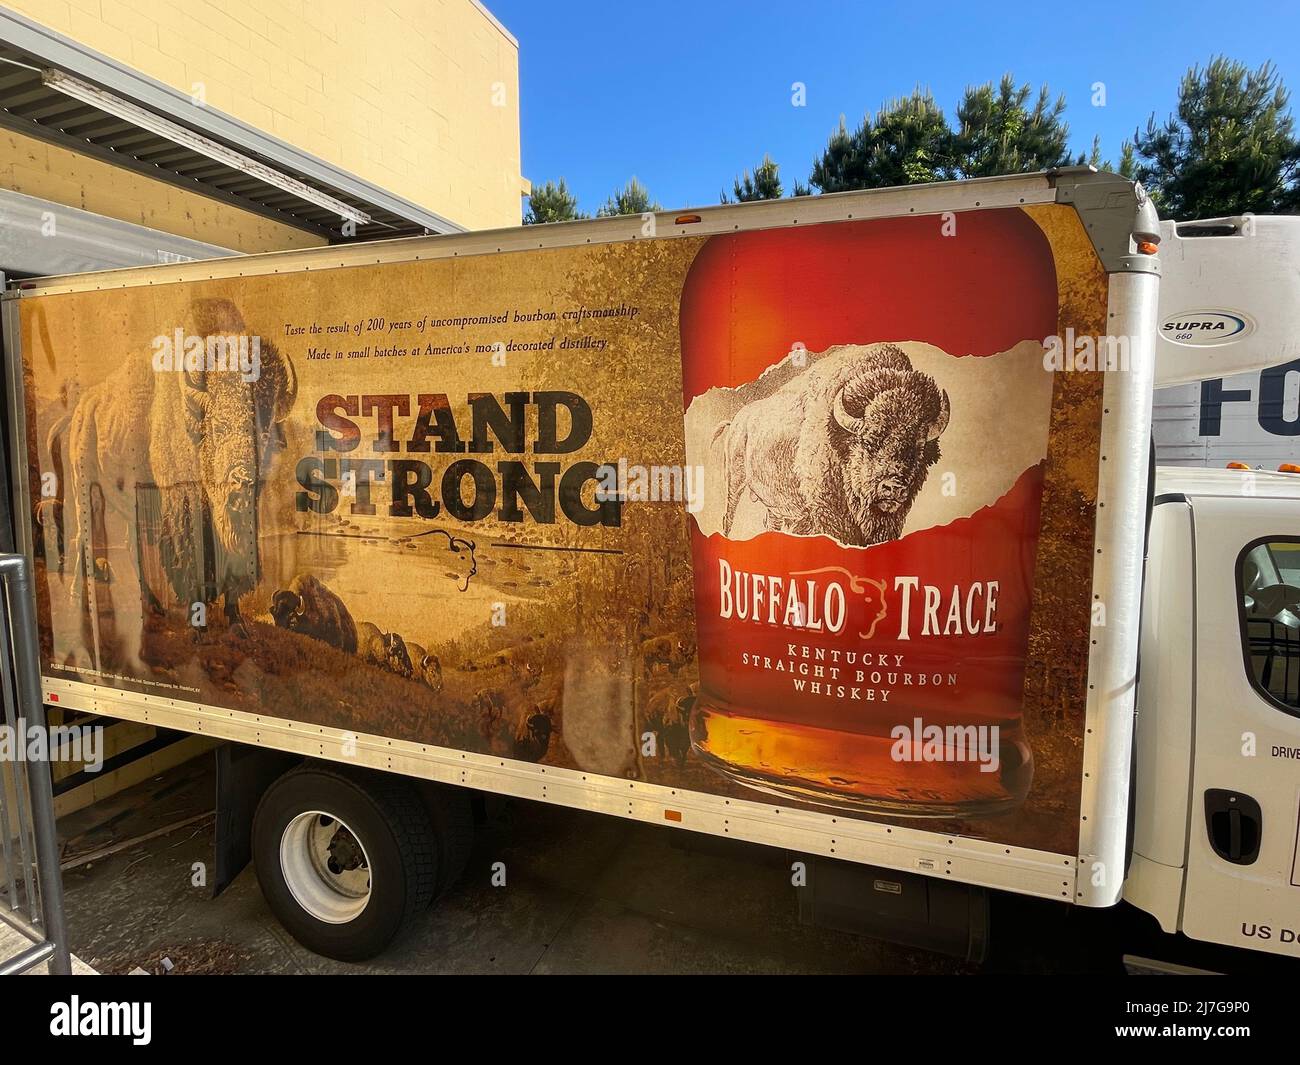 Augusta, Ga USA - 04 27 22: Stand strong buffalo trace truck at a dock Stock Photo